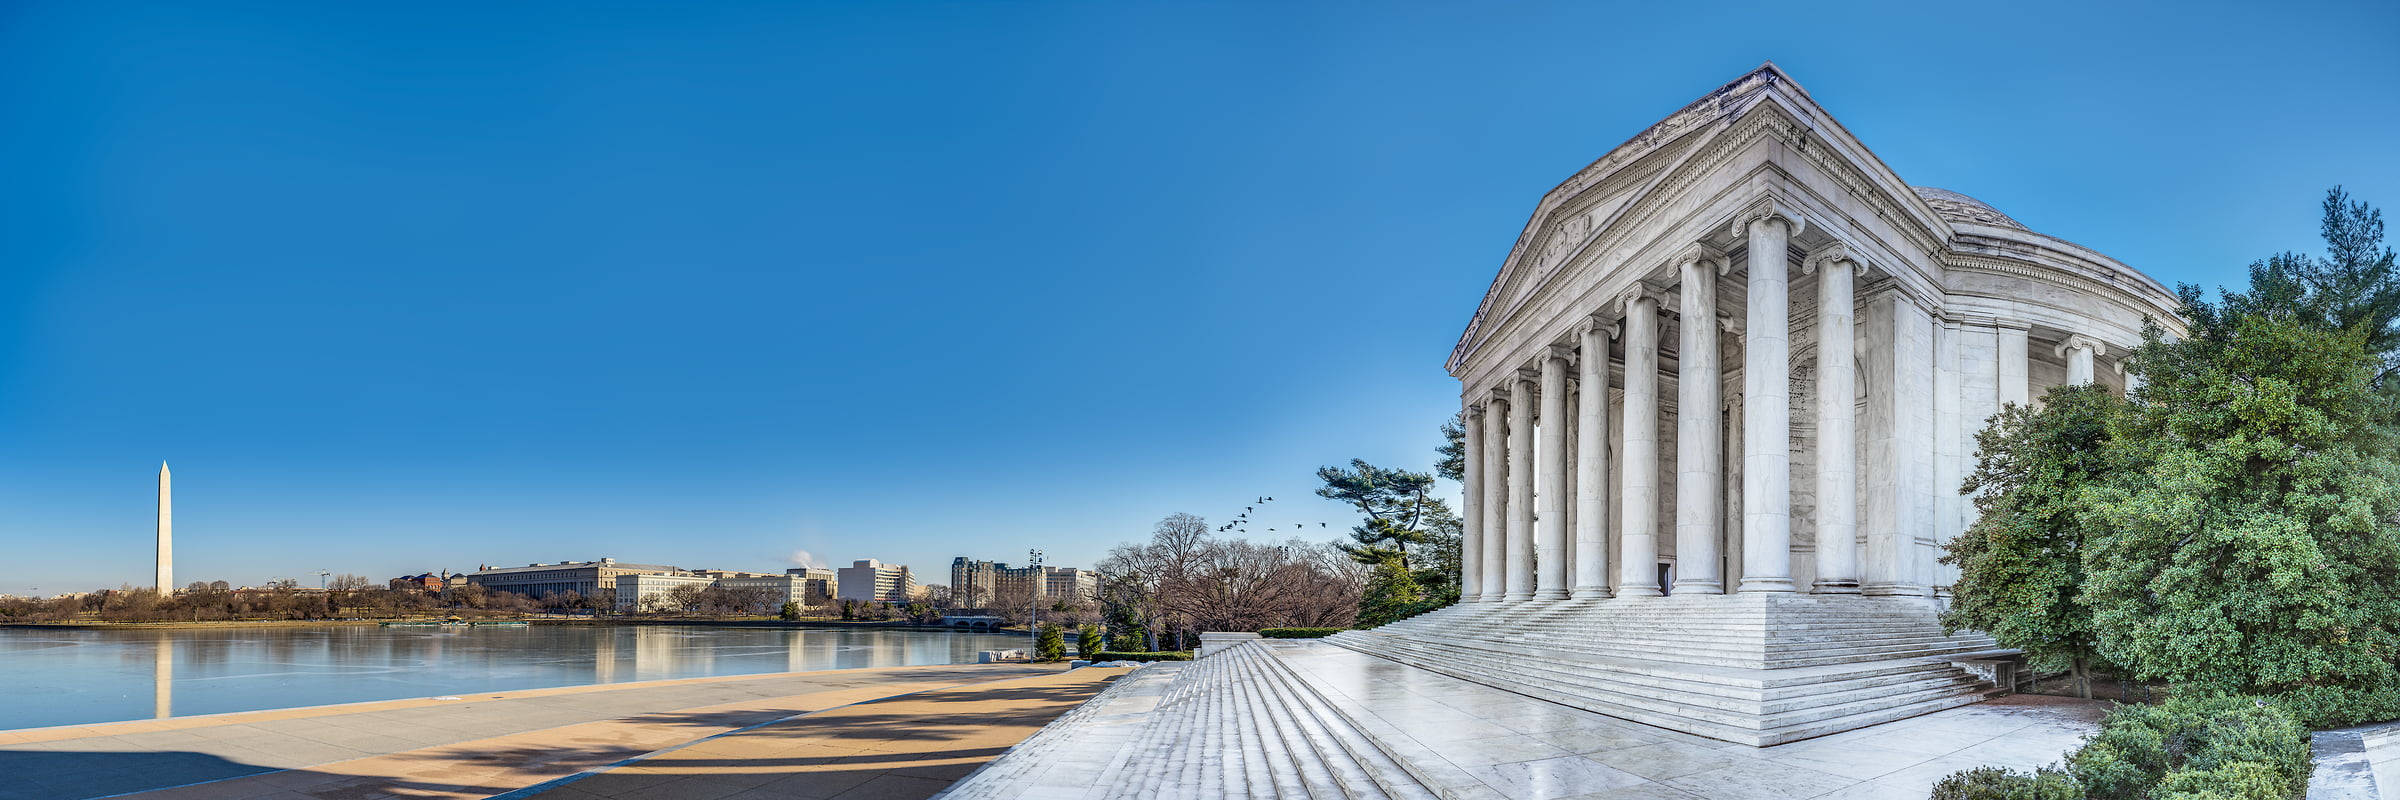 Jefferson Memorial Panoramic Shot Picture